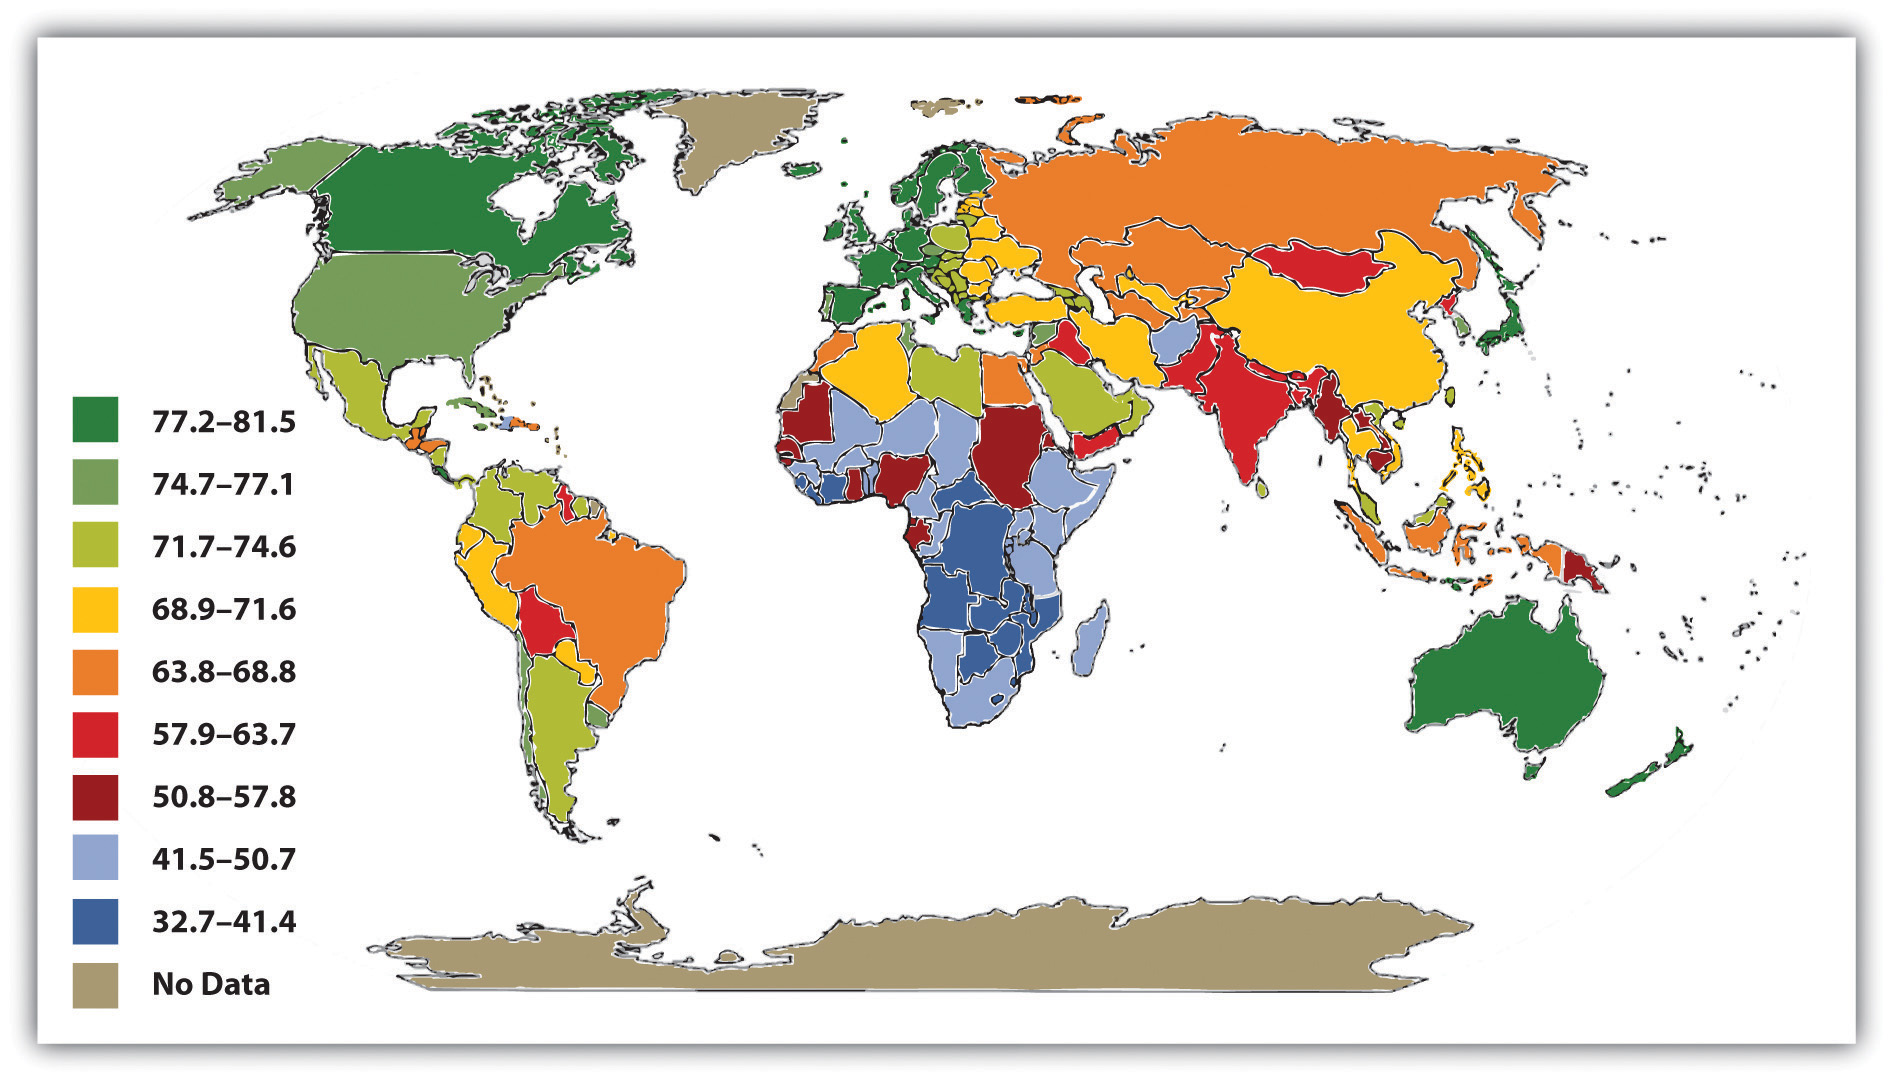 Average Life Expectancy Across the Globe